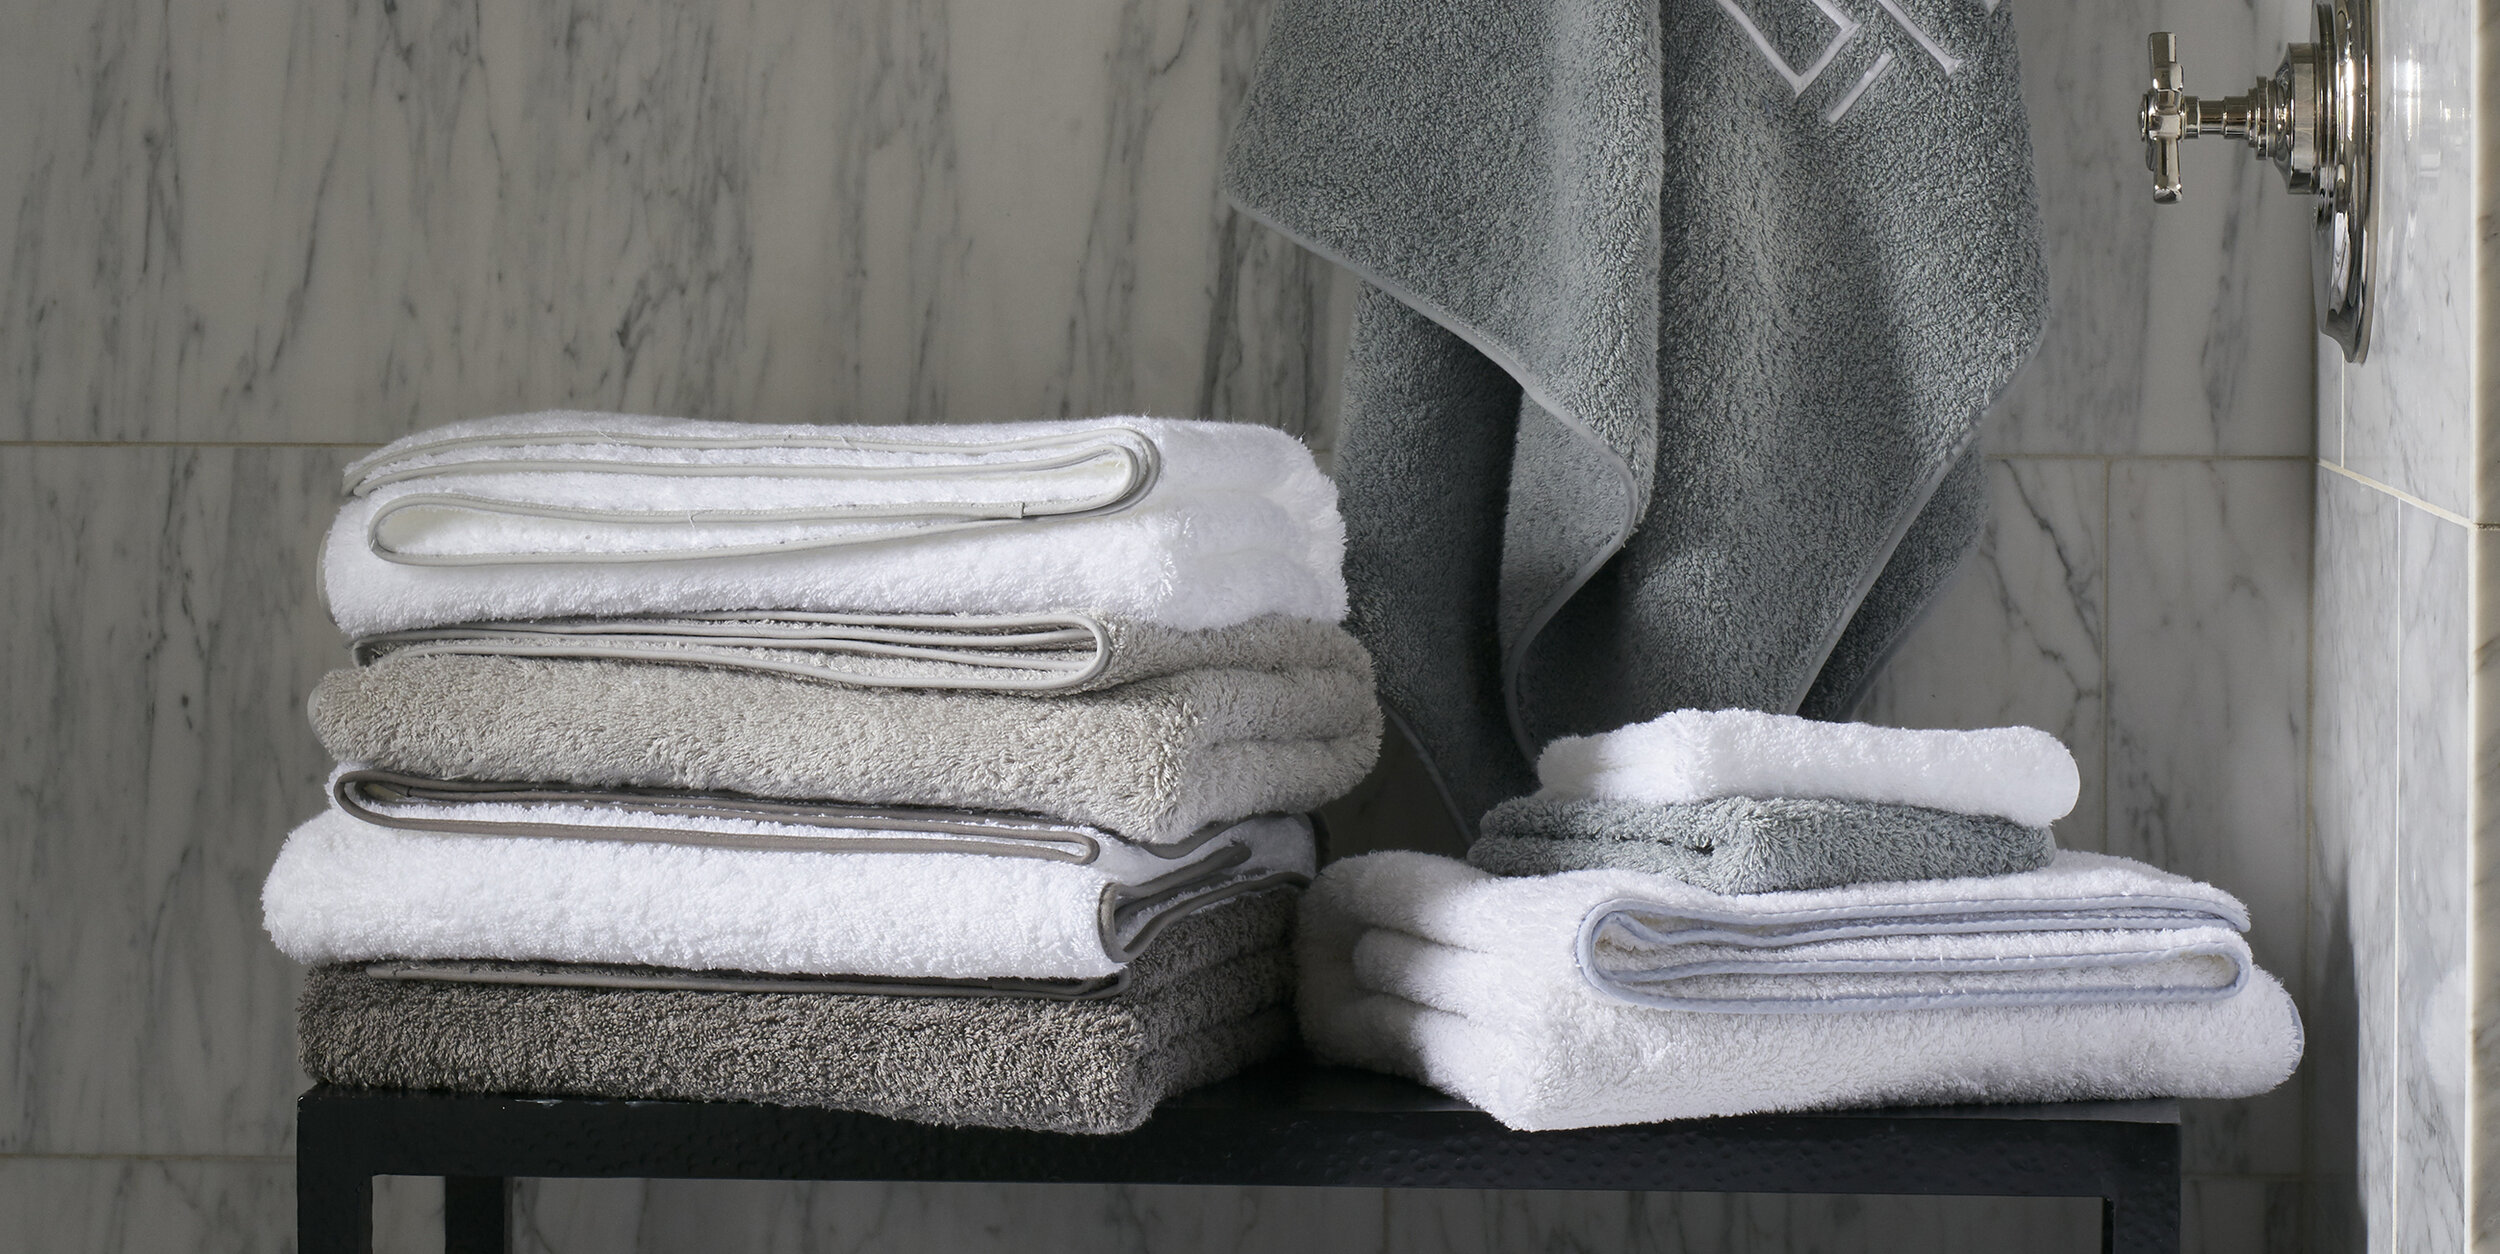 Customized Size Bath Towel Towel Set 100% Cotton White Hand Bath